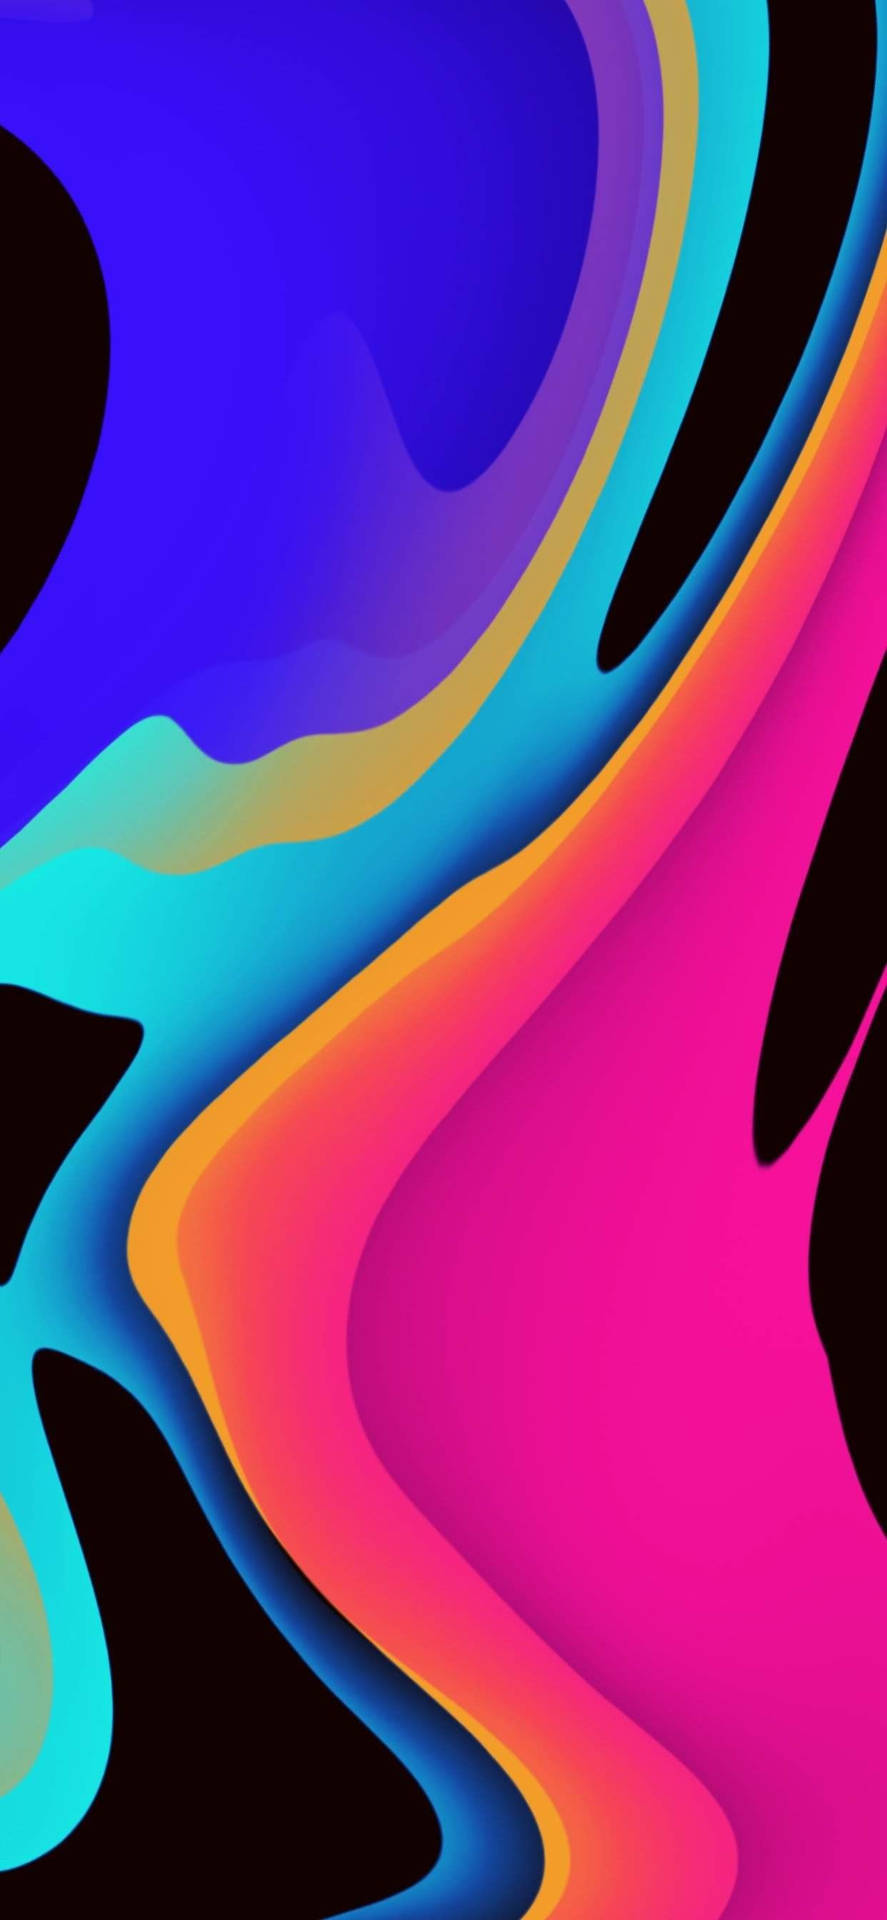 Colorful Amoled Digital Abstract Art Wallpaper